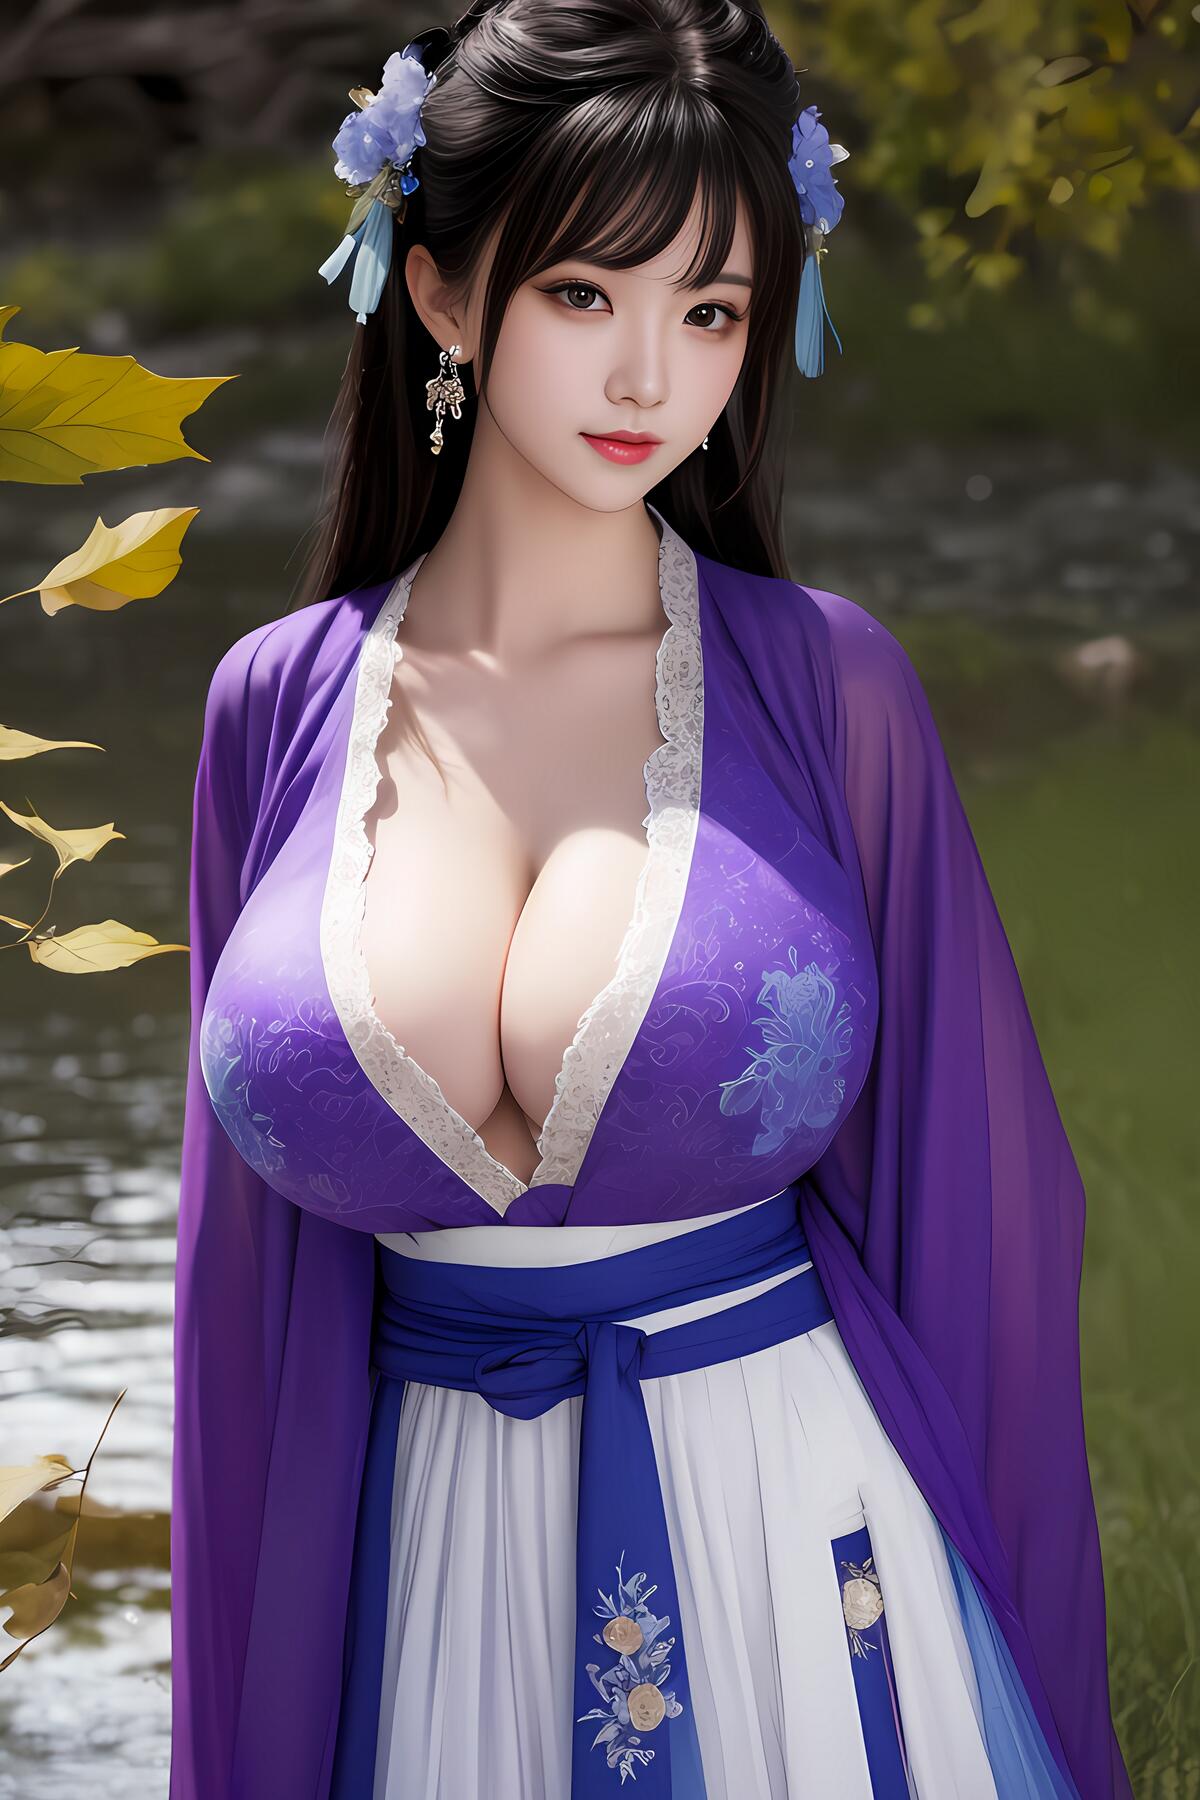 Dark-haired girl in a purple kimono